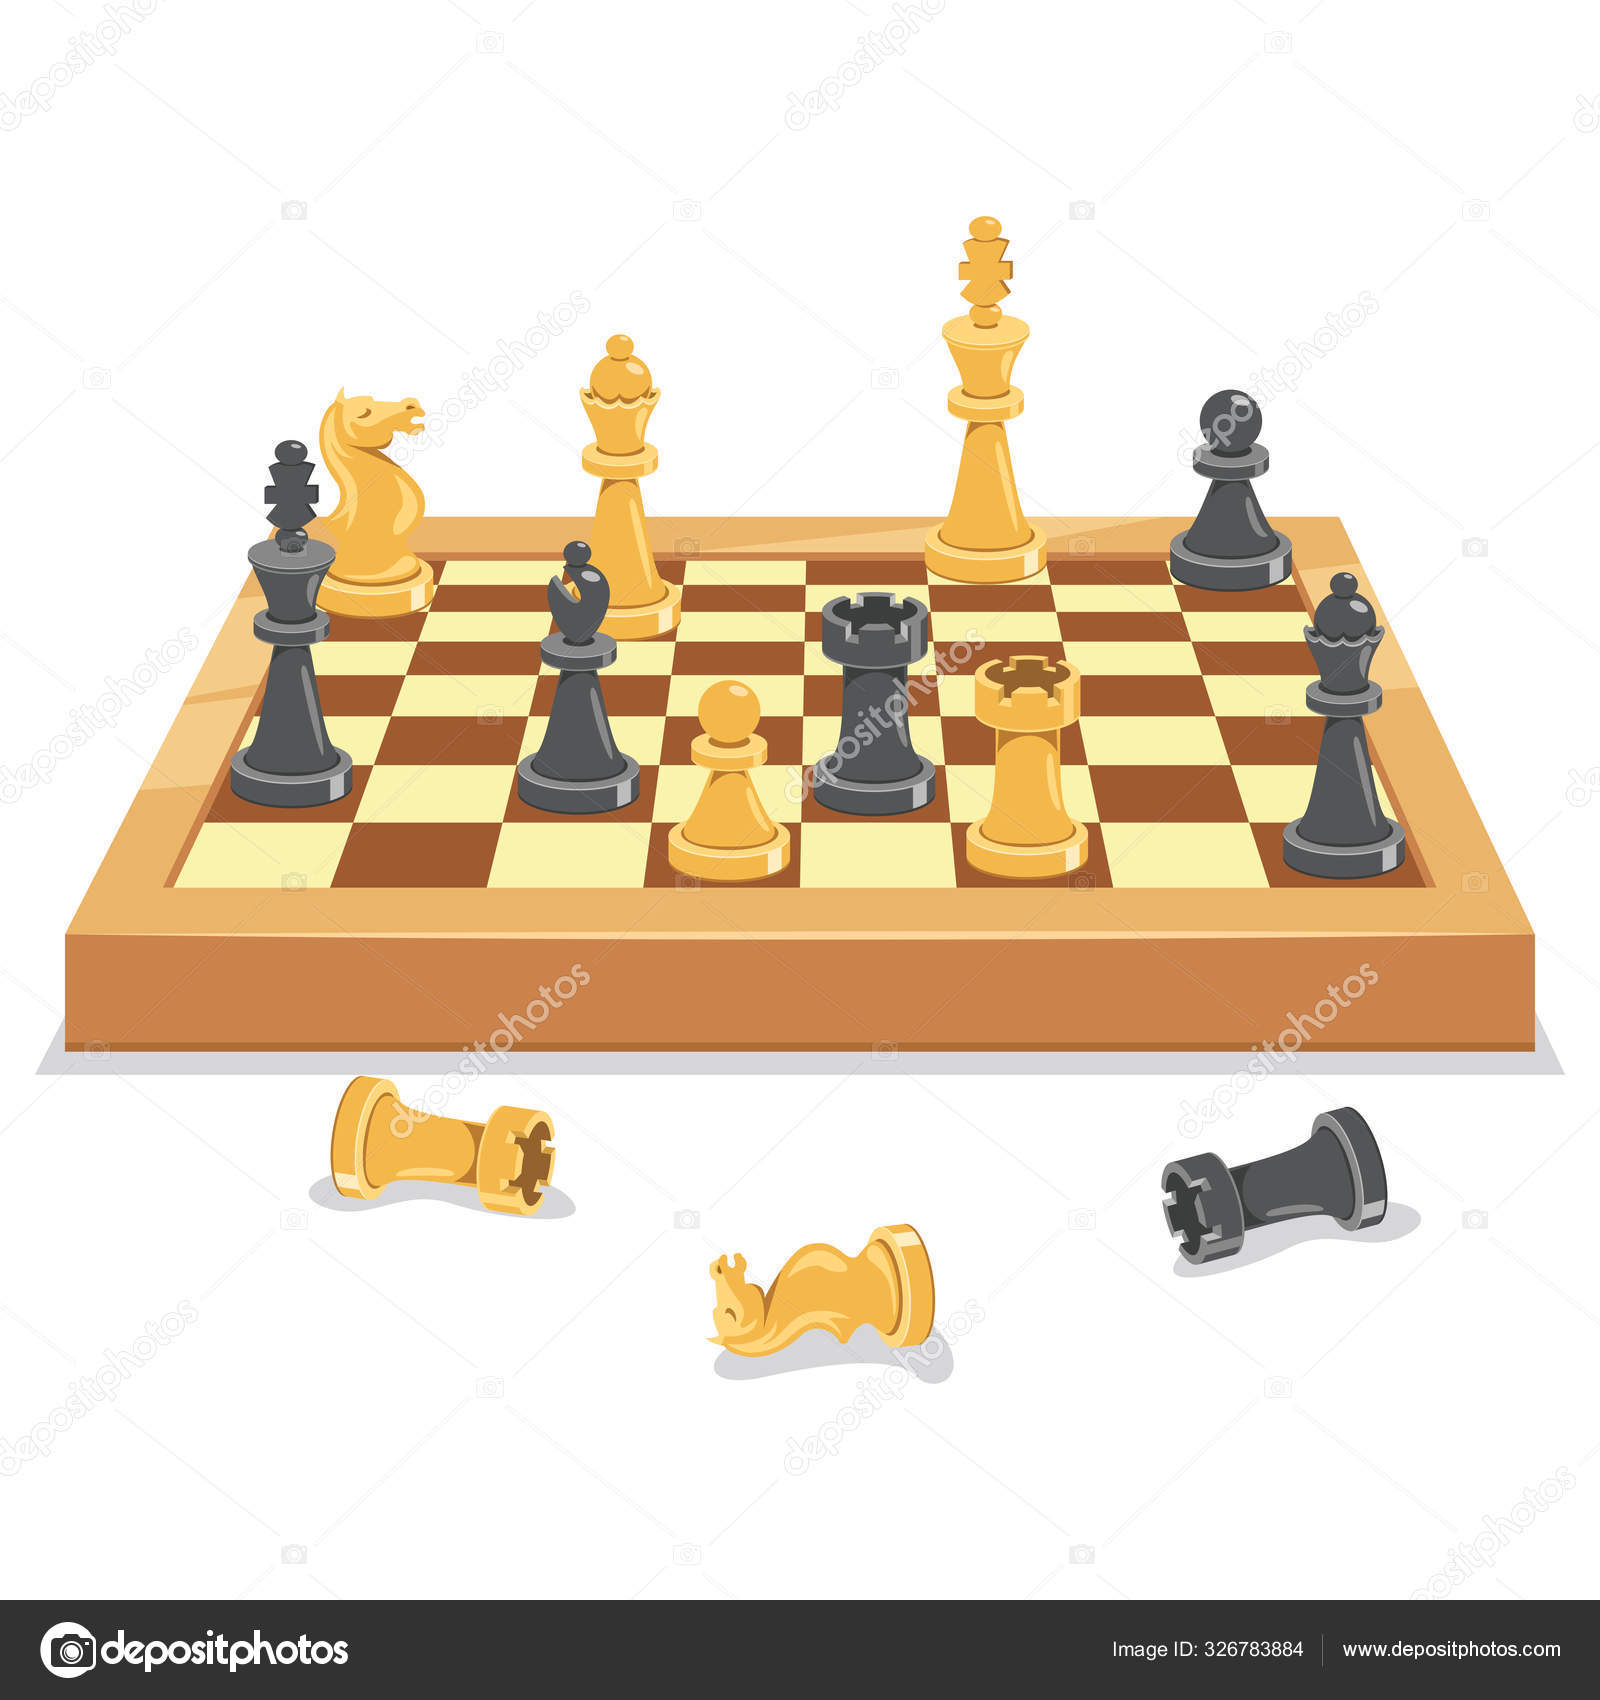 Tabuleiro de xadrez de desenhos animados com peças de xadrez